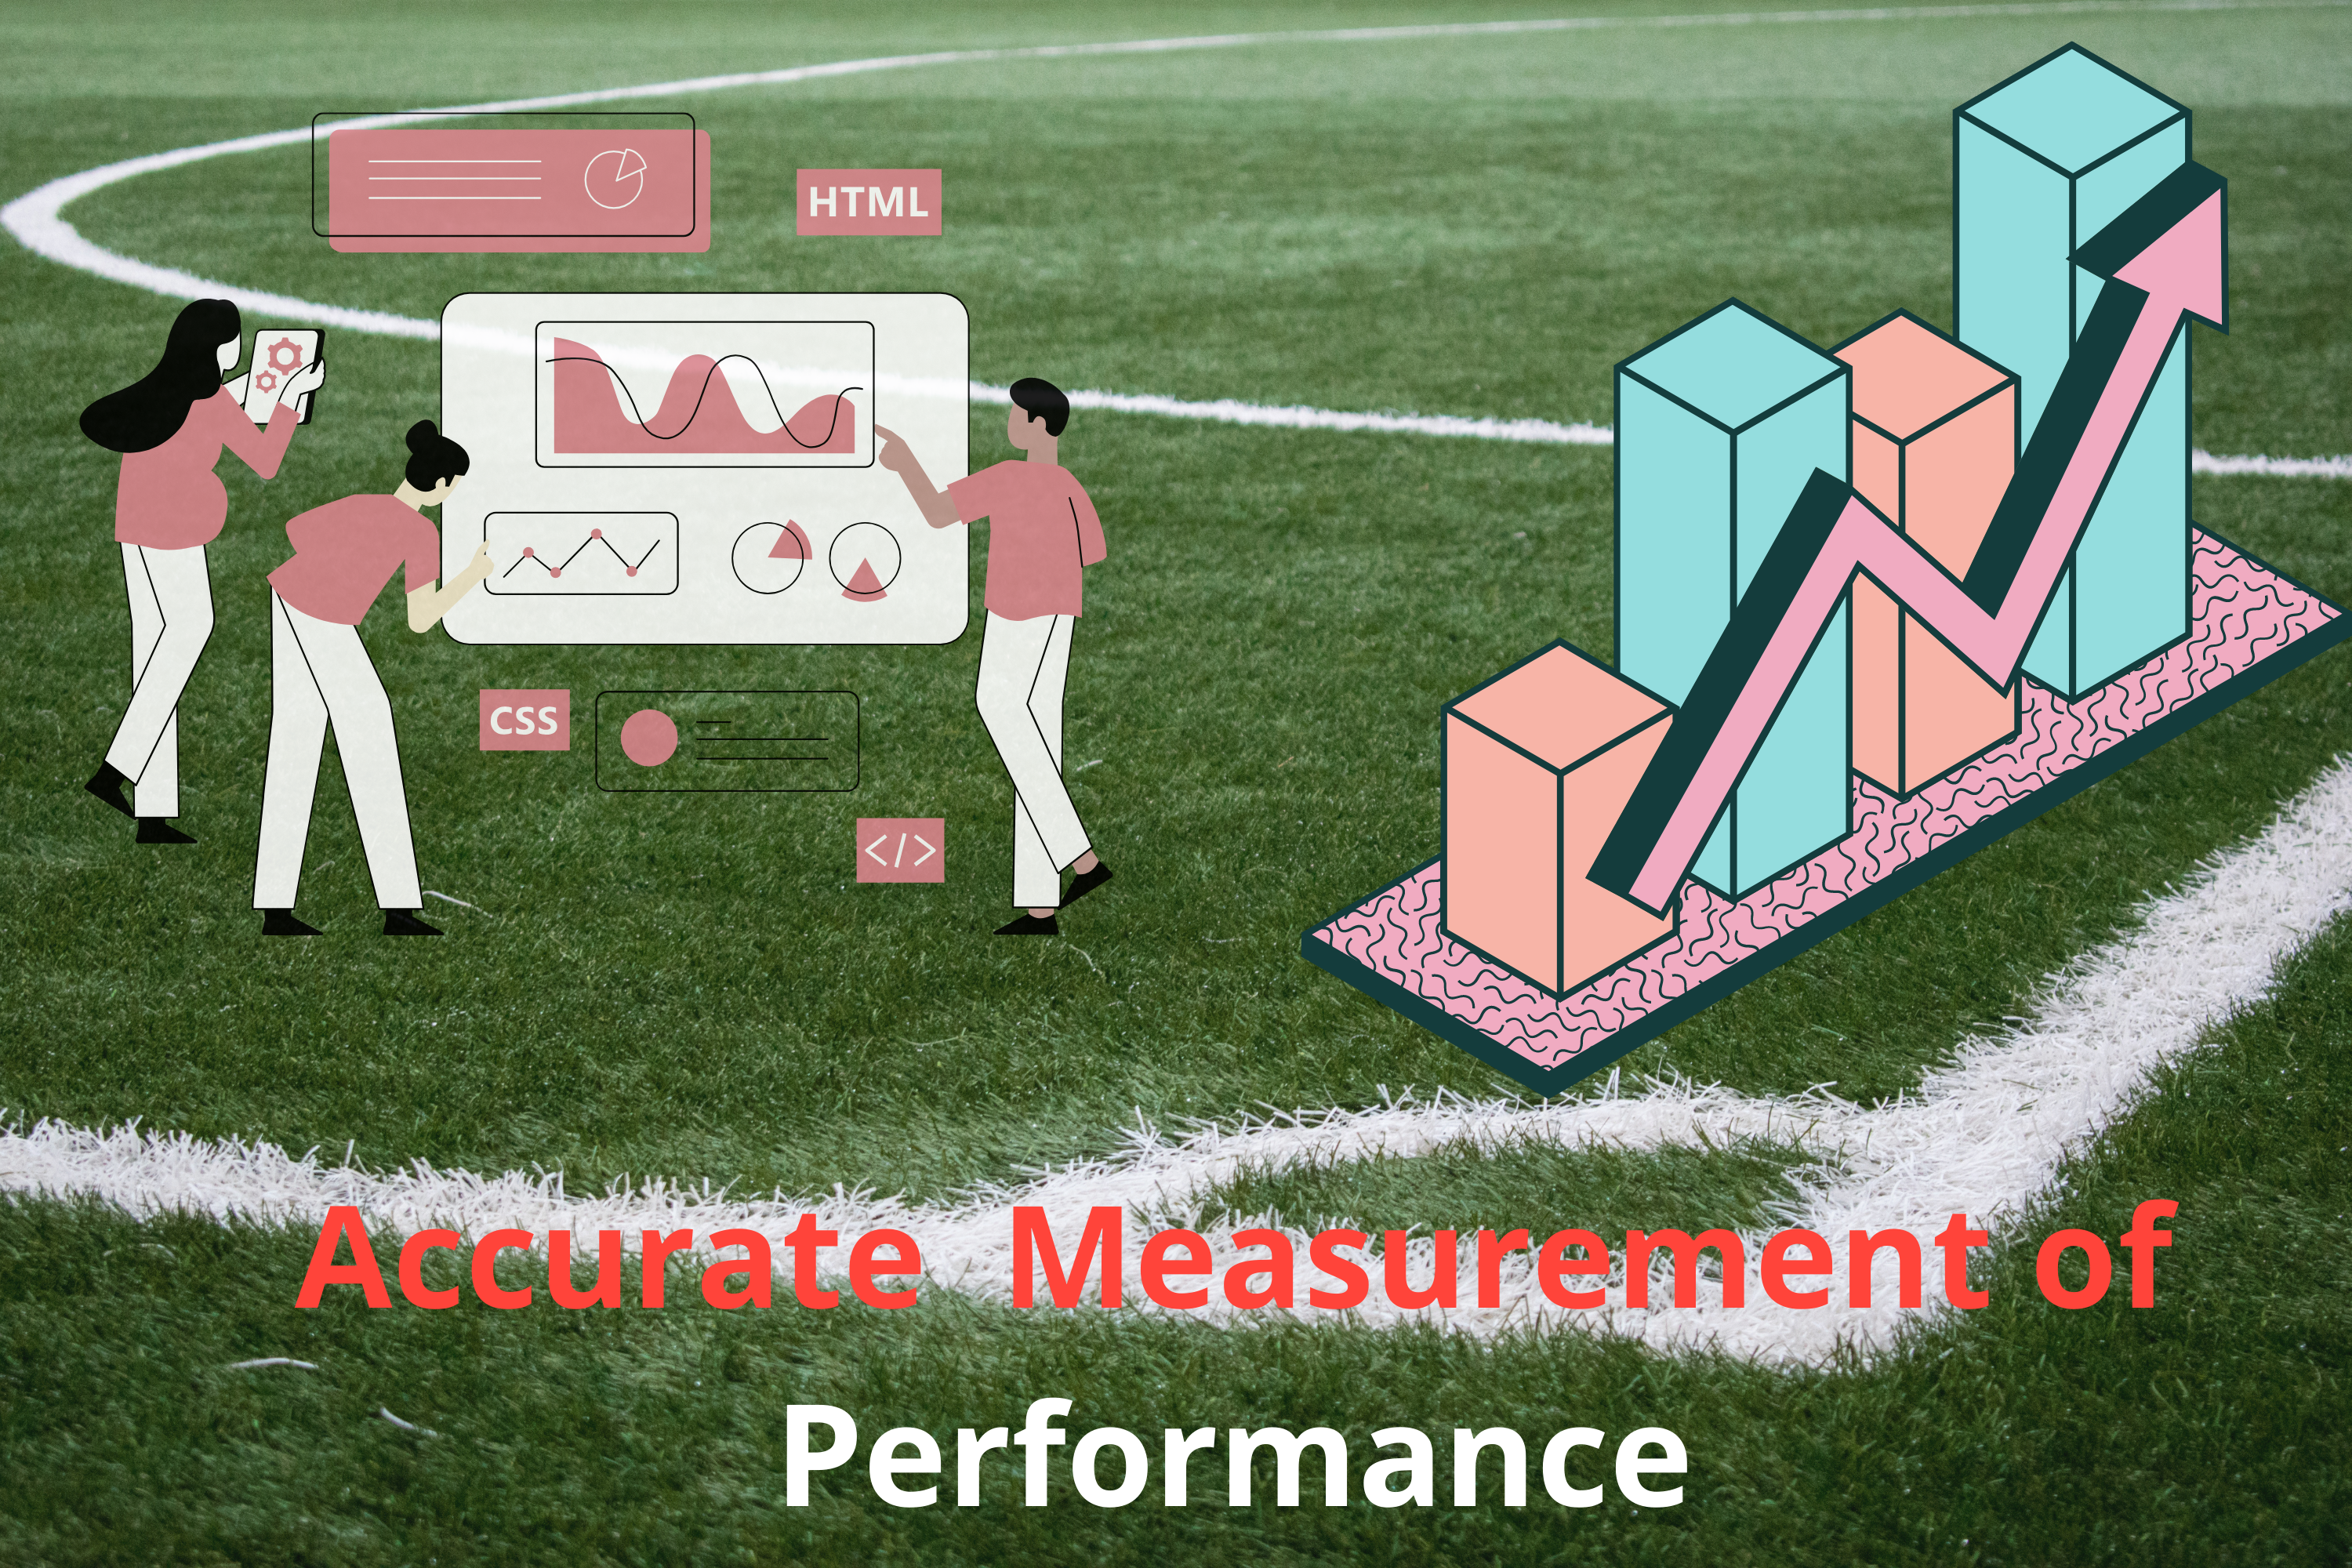 Accurate measurement of performance facilitates organizational development.